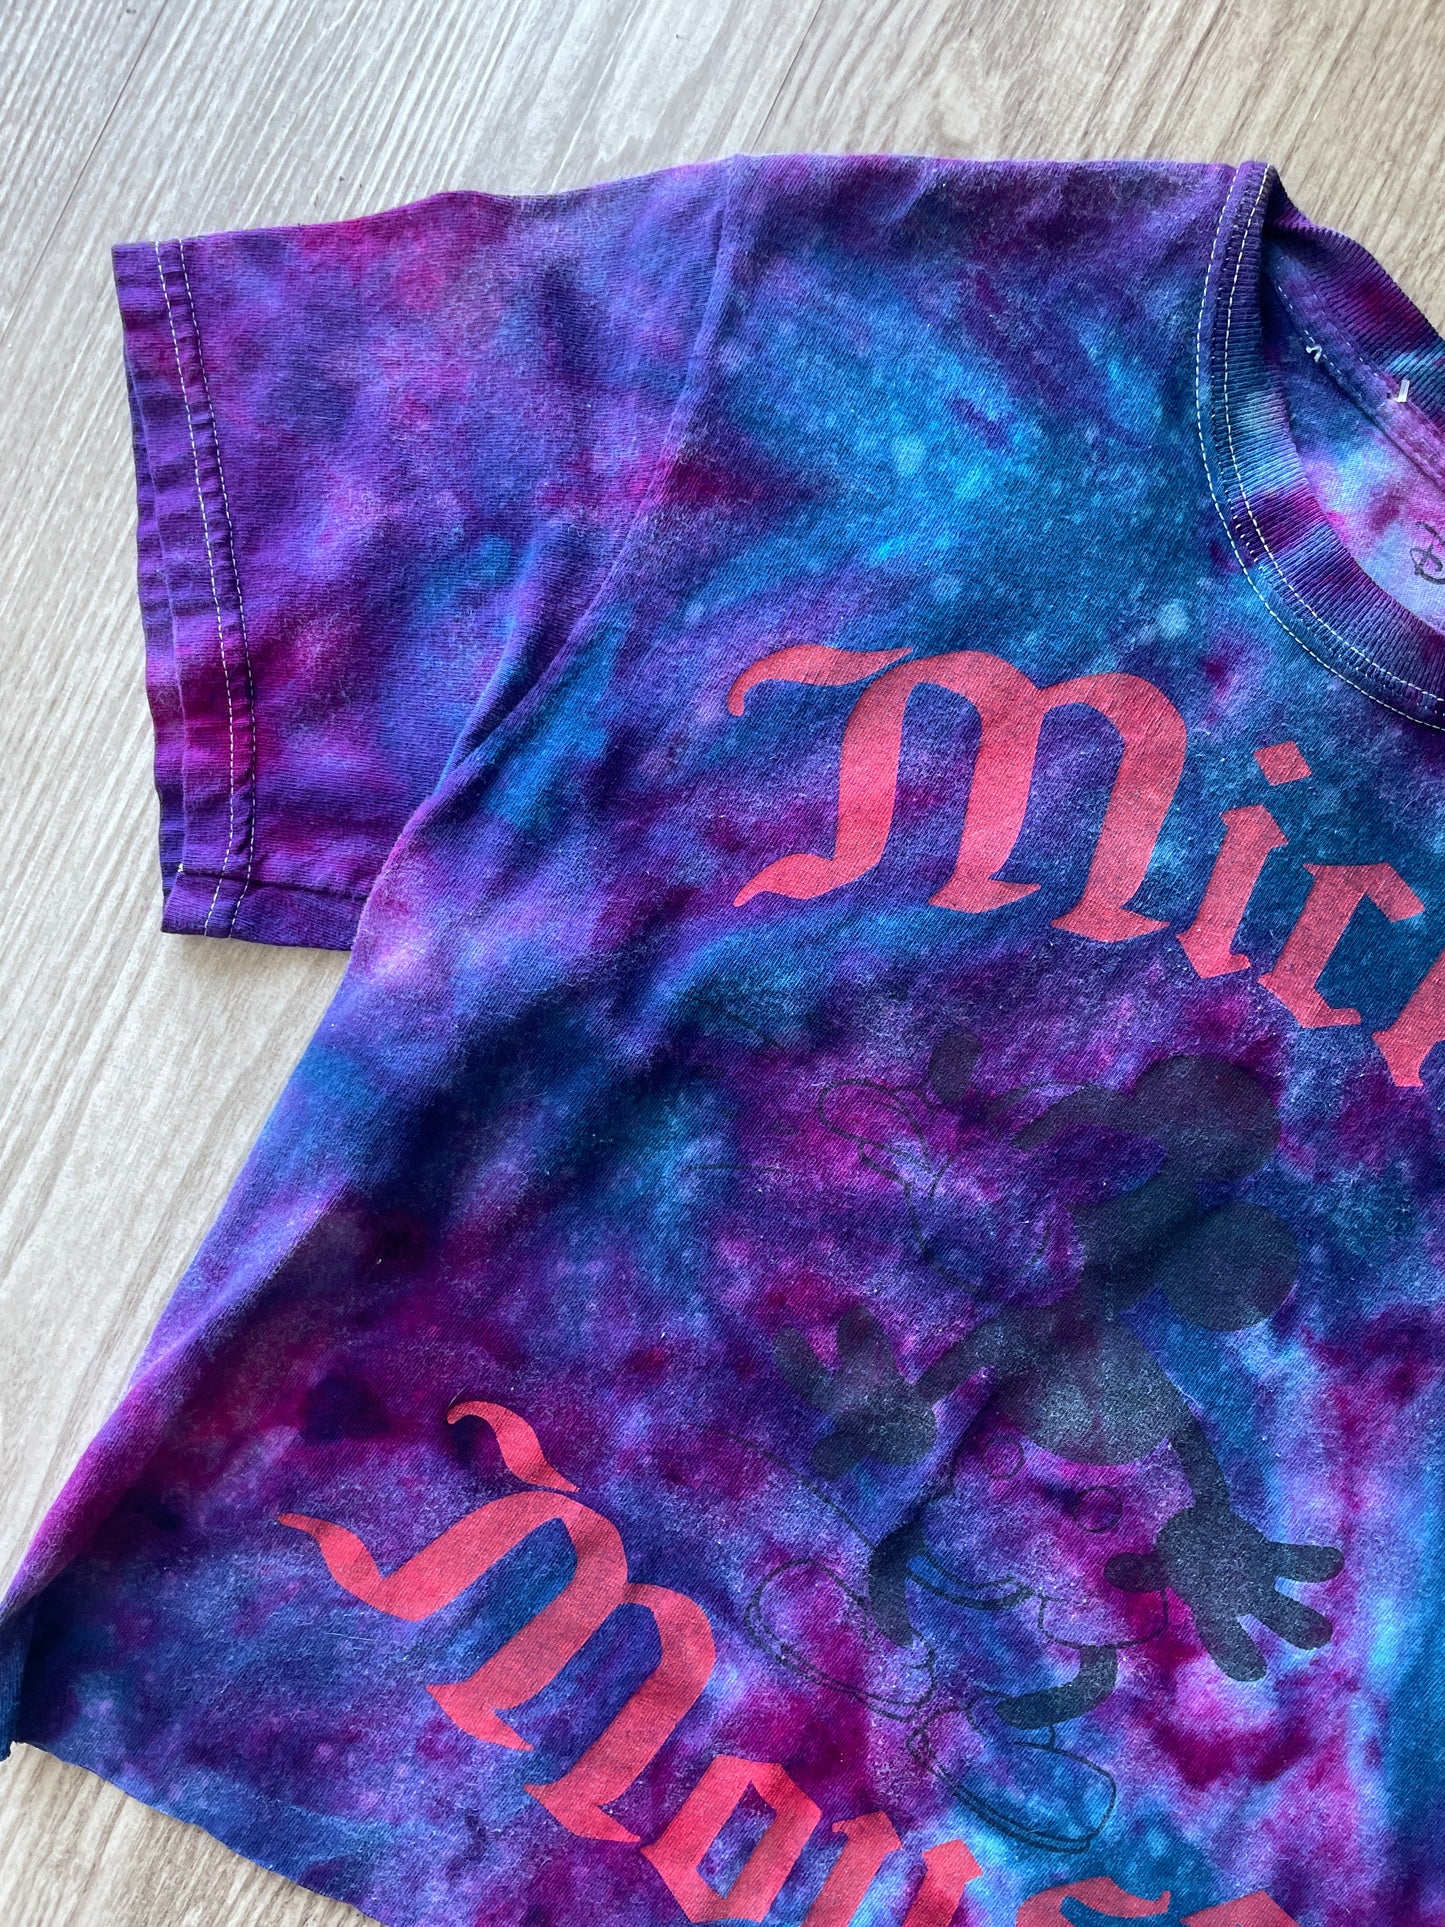 Small Men’s Mickey Mouse Handmade Galaxy Tie Dye Cropped T-Shirt | Blue and Purple Ice Dye Tie Dye Short Sleeve Crop Top